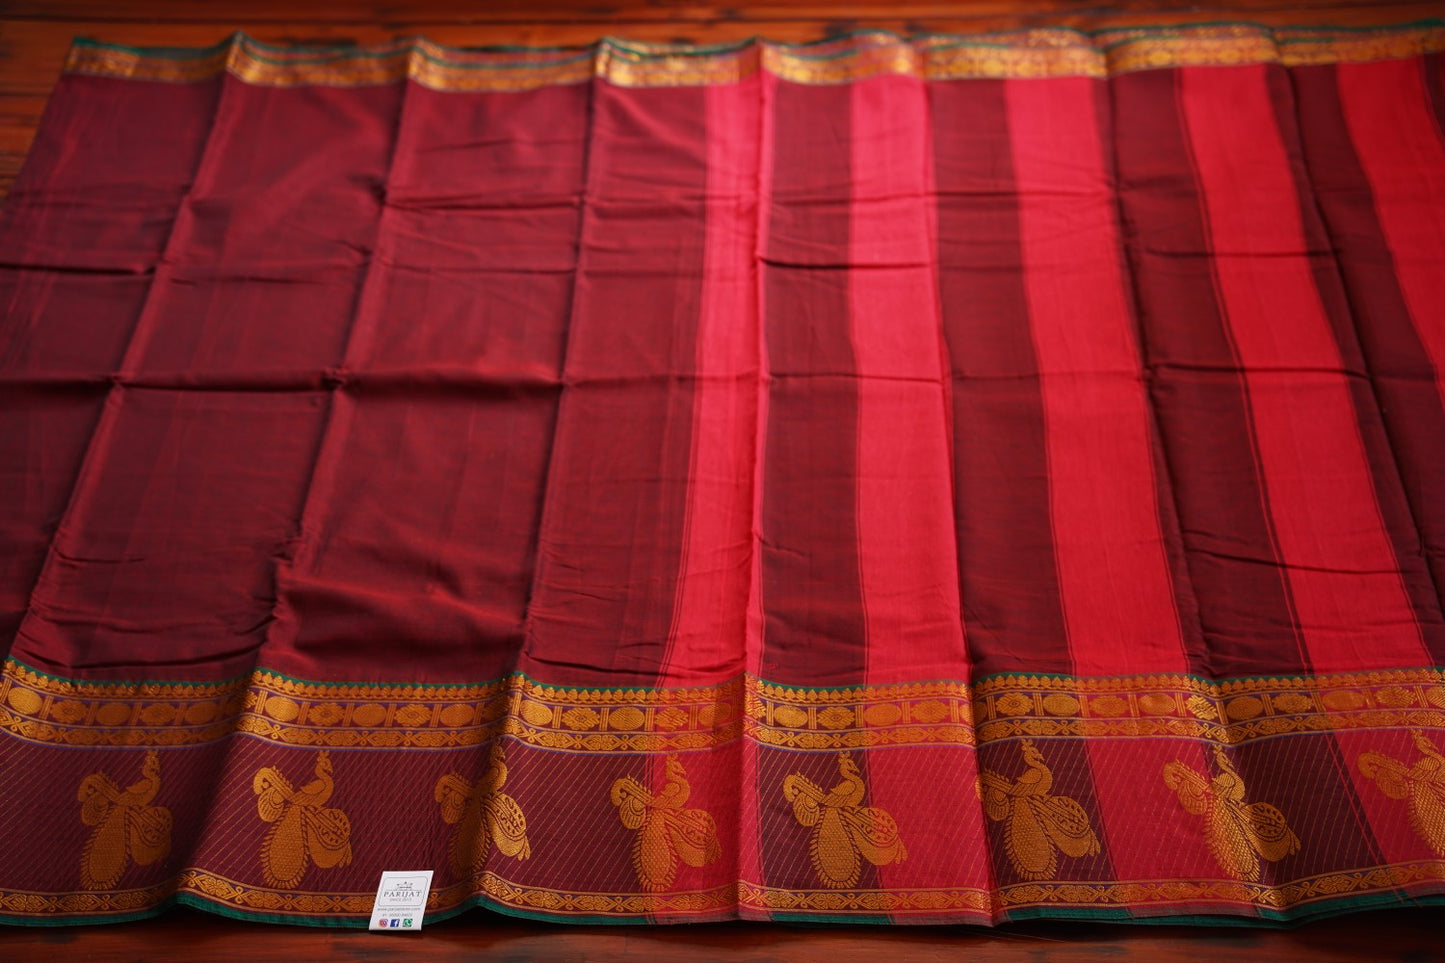 Narayanapet handloom Cotton Saree with Jari border PC9702